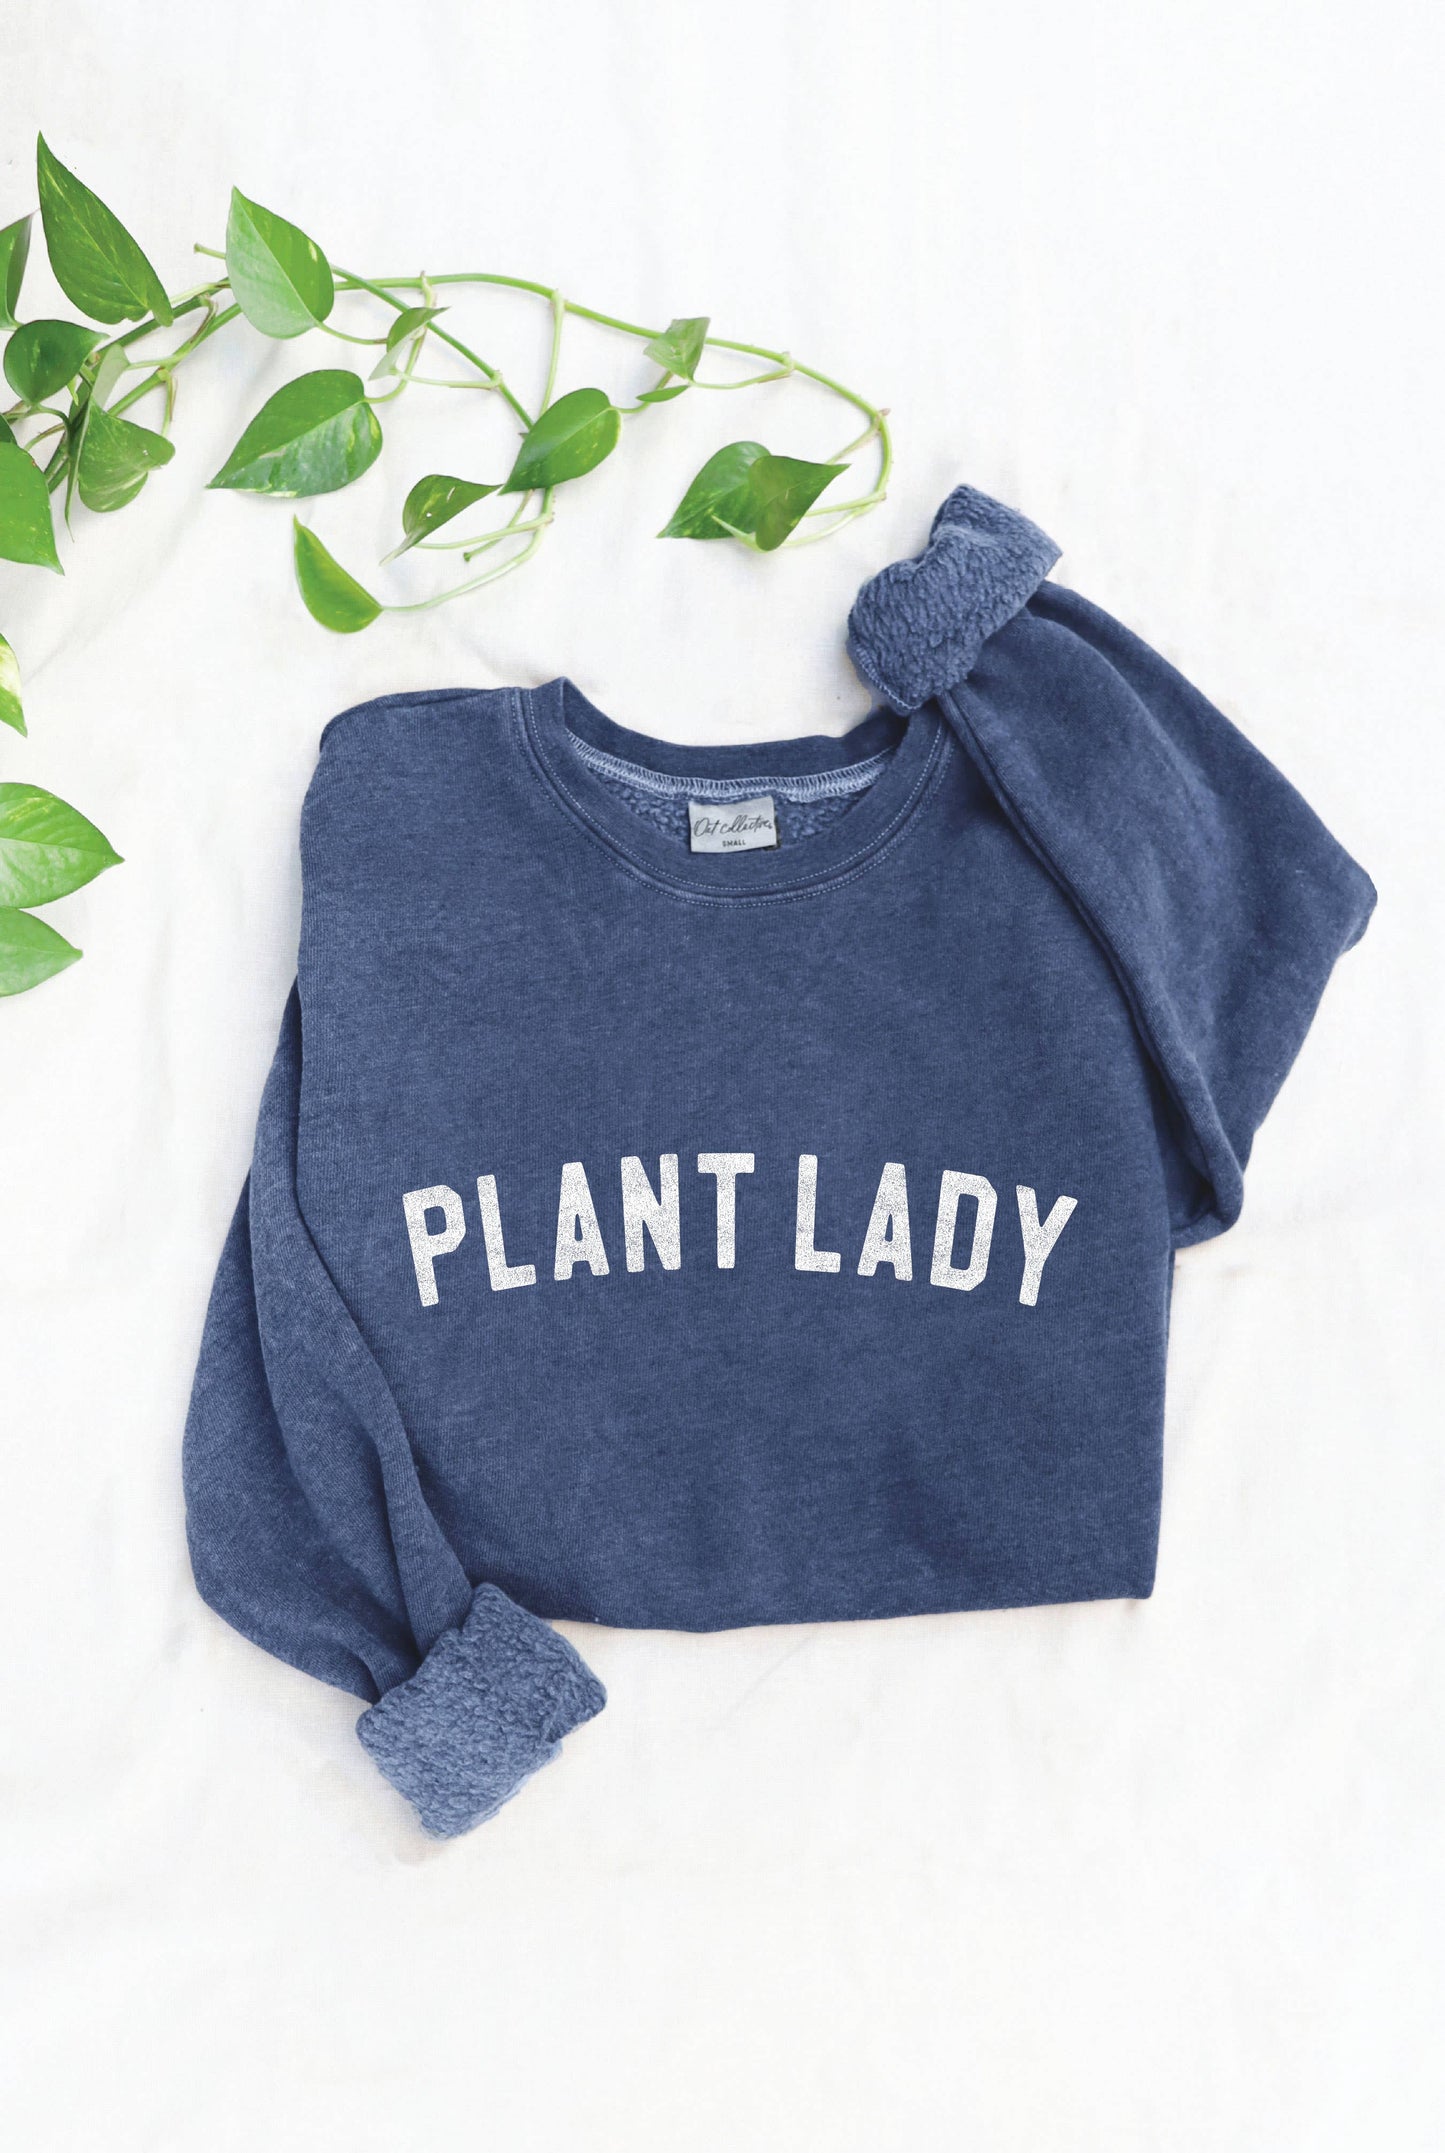 PLANT LADY Mineral Graphic Sweatshirt